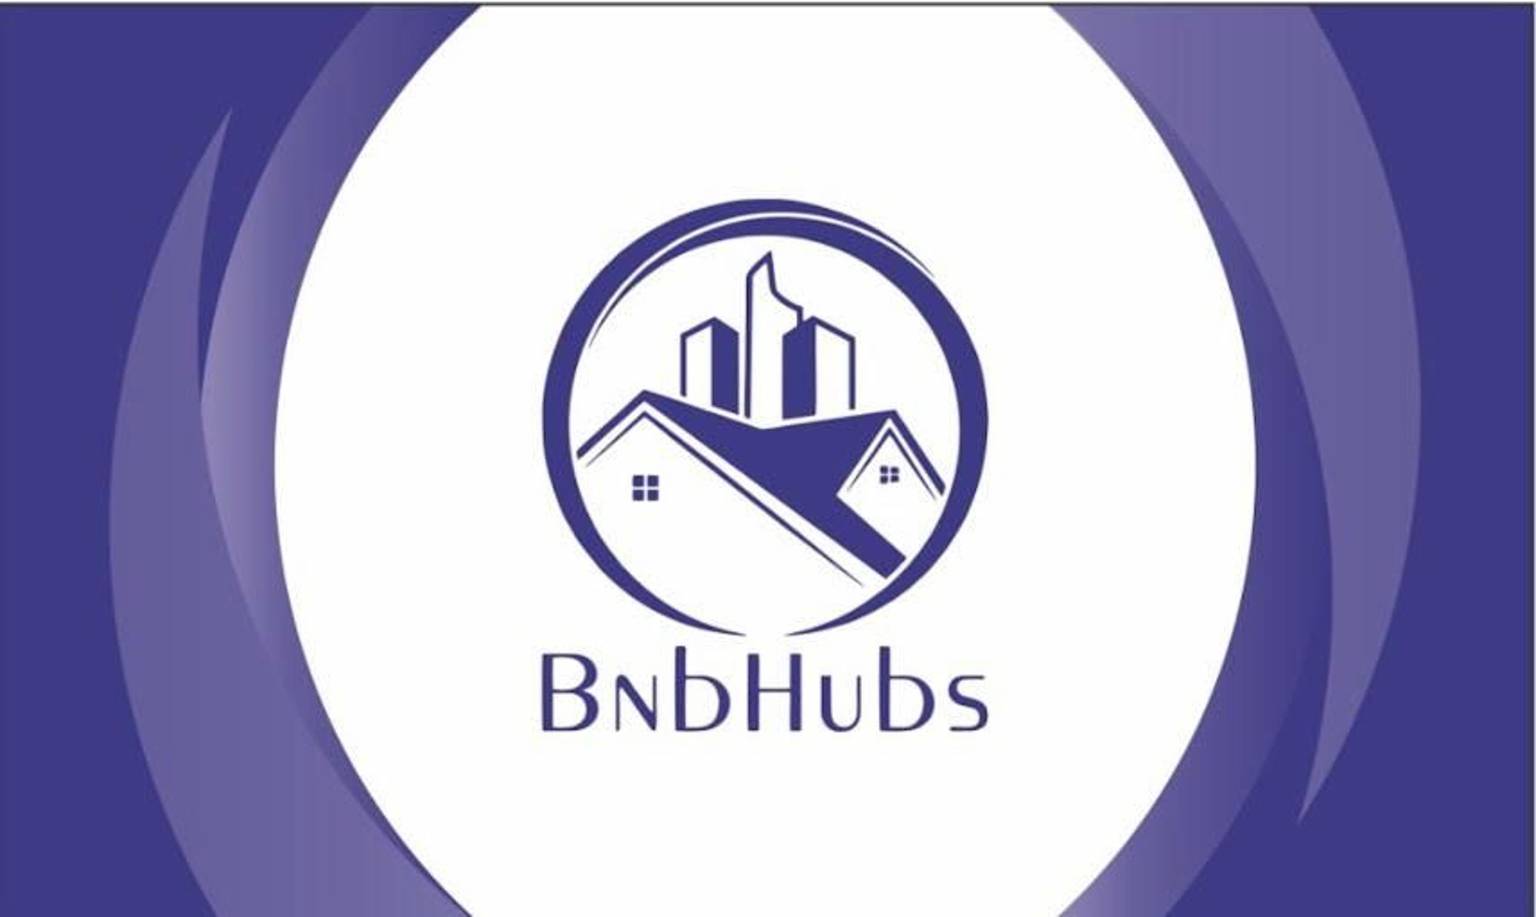 BnbHubs LLC